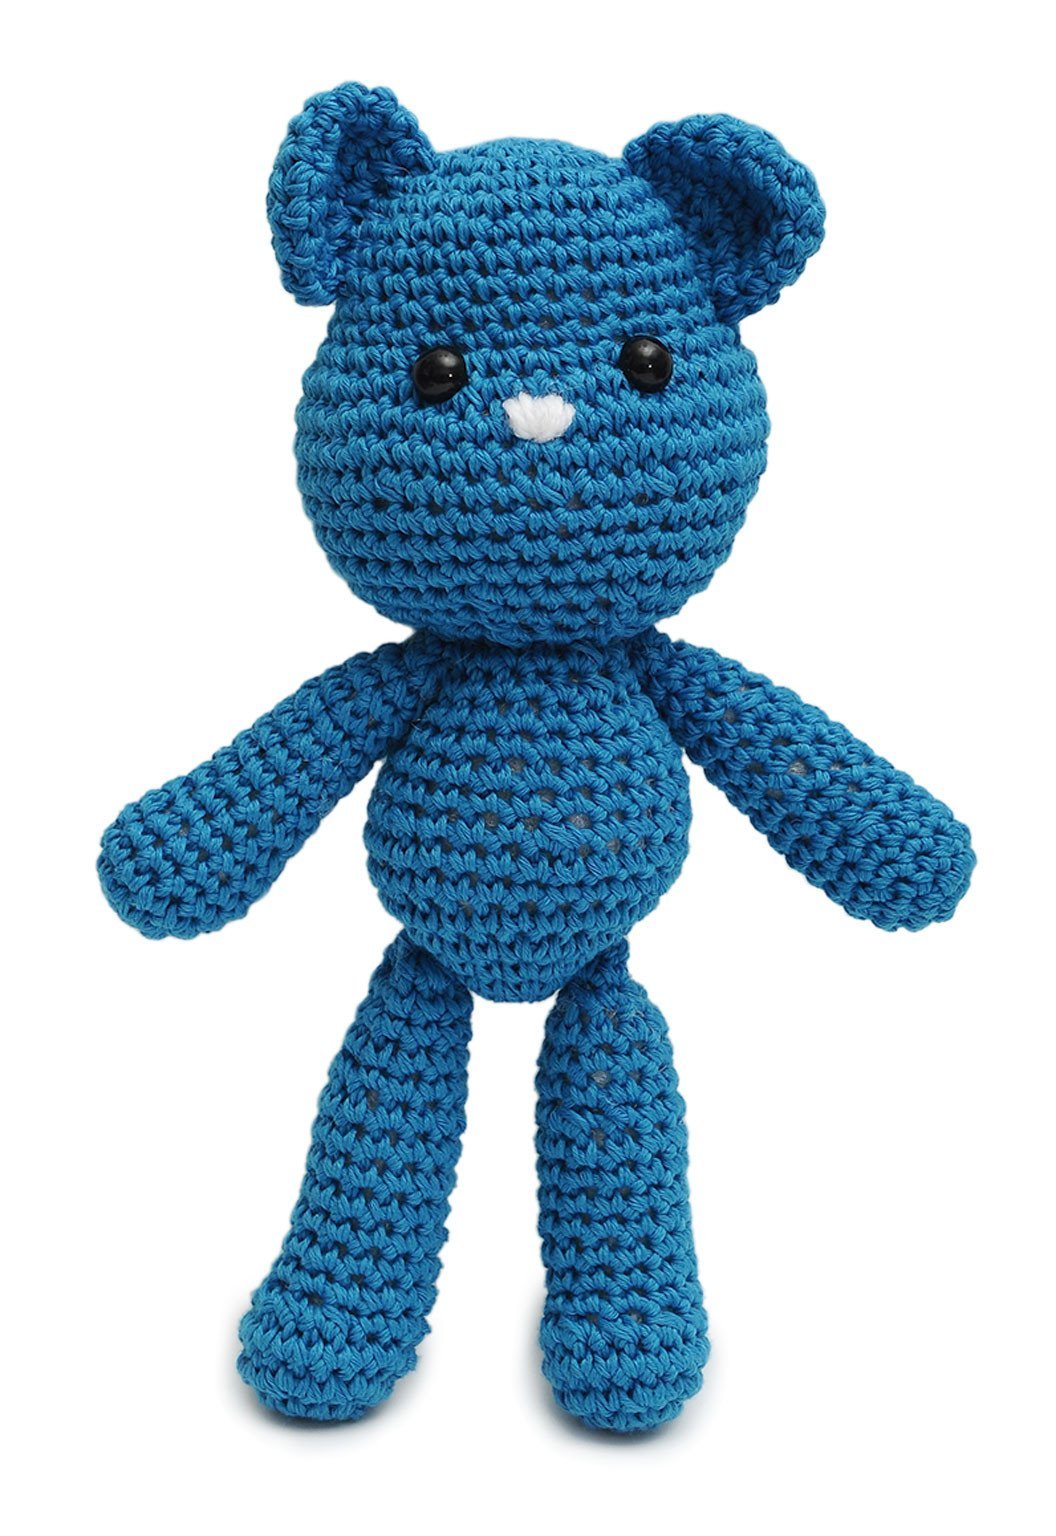 Teddy bears Handmade Amigurumi Stuffed Toy Knit Crochet Doll VAC